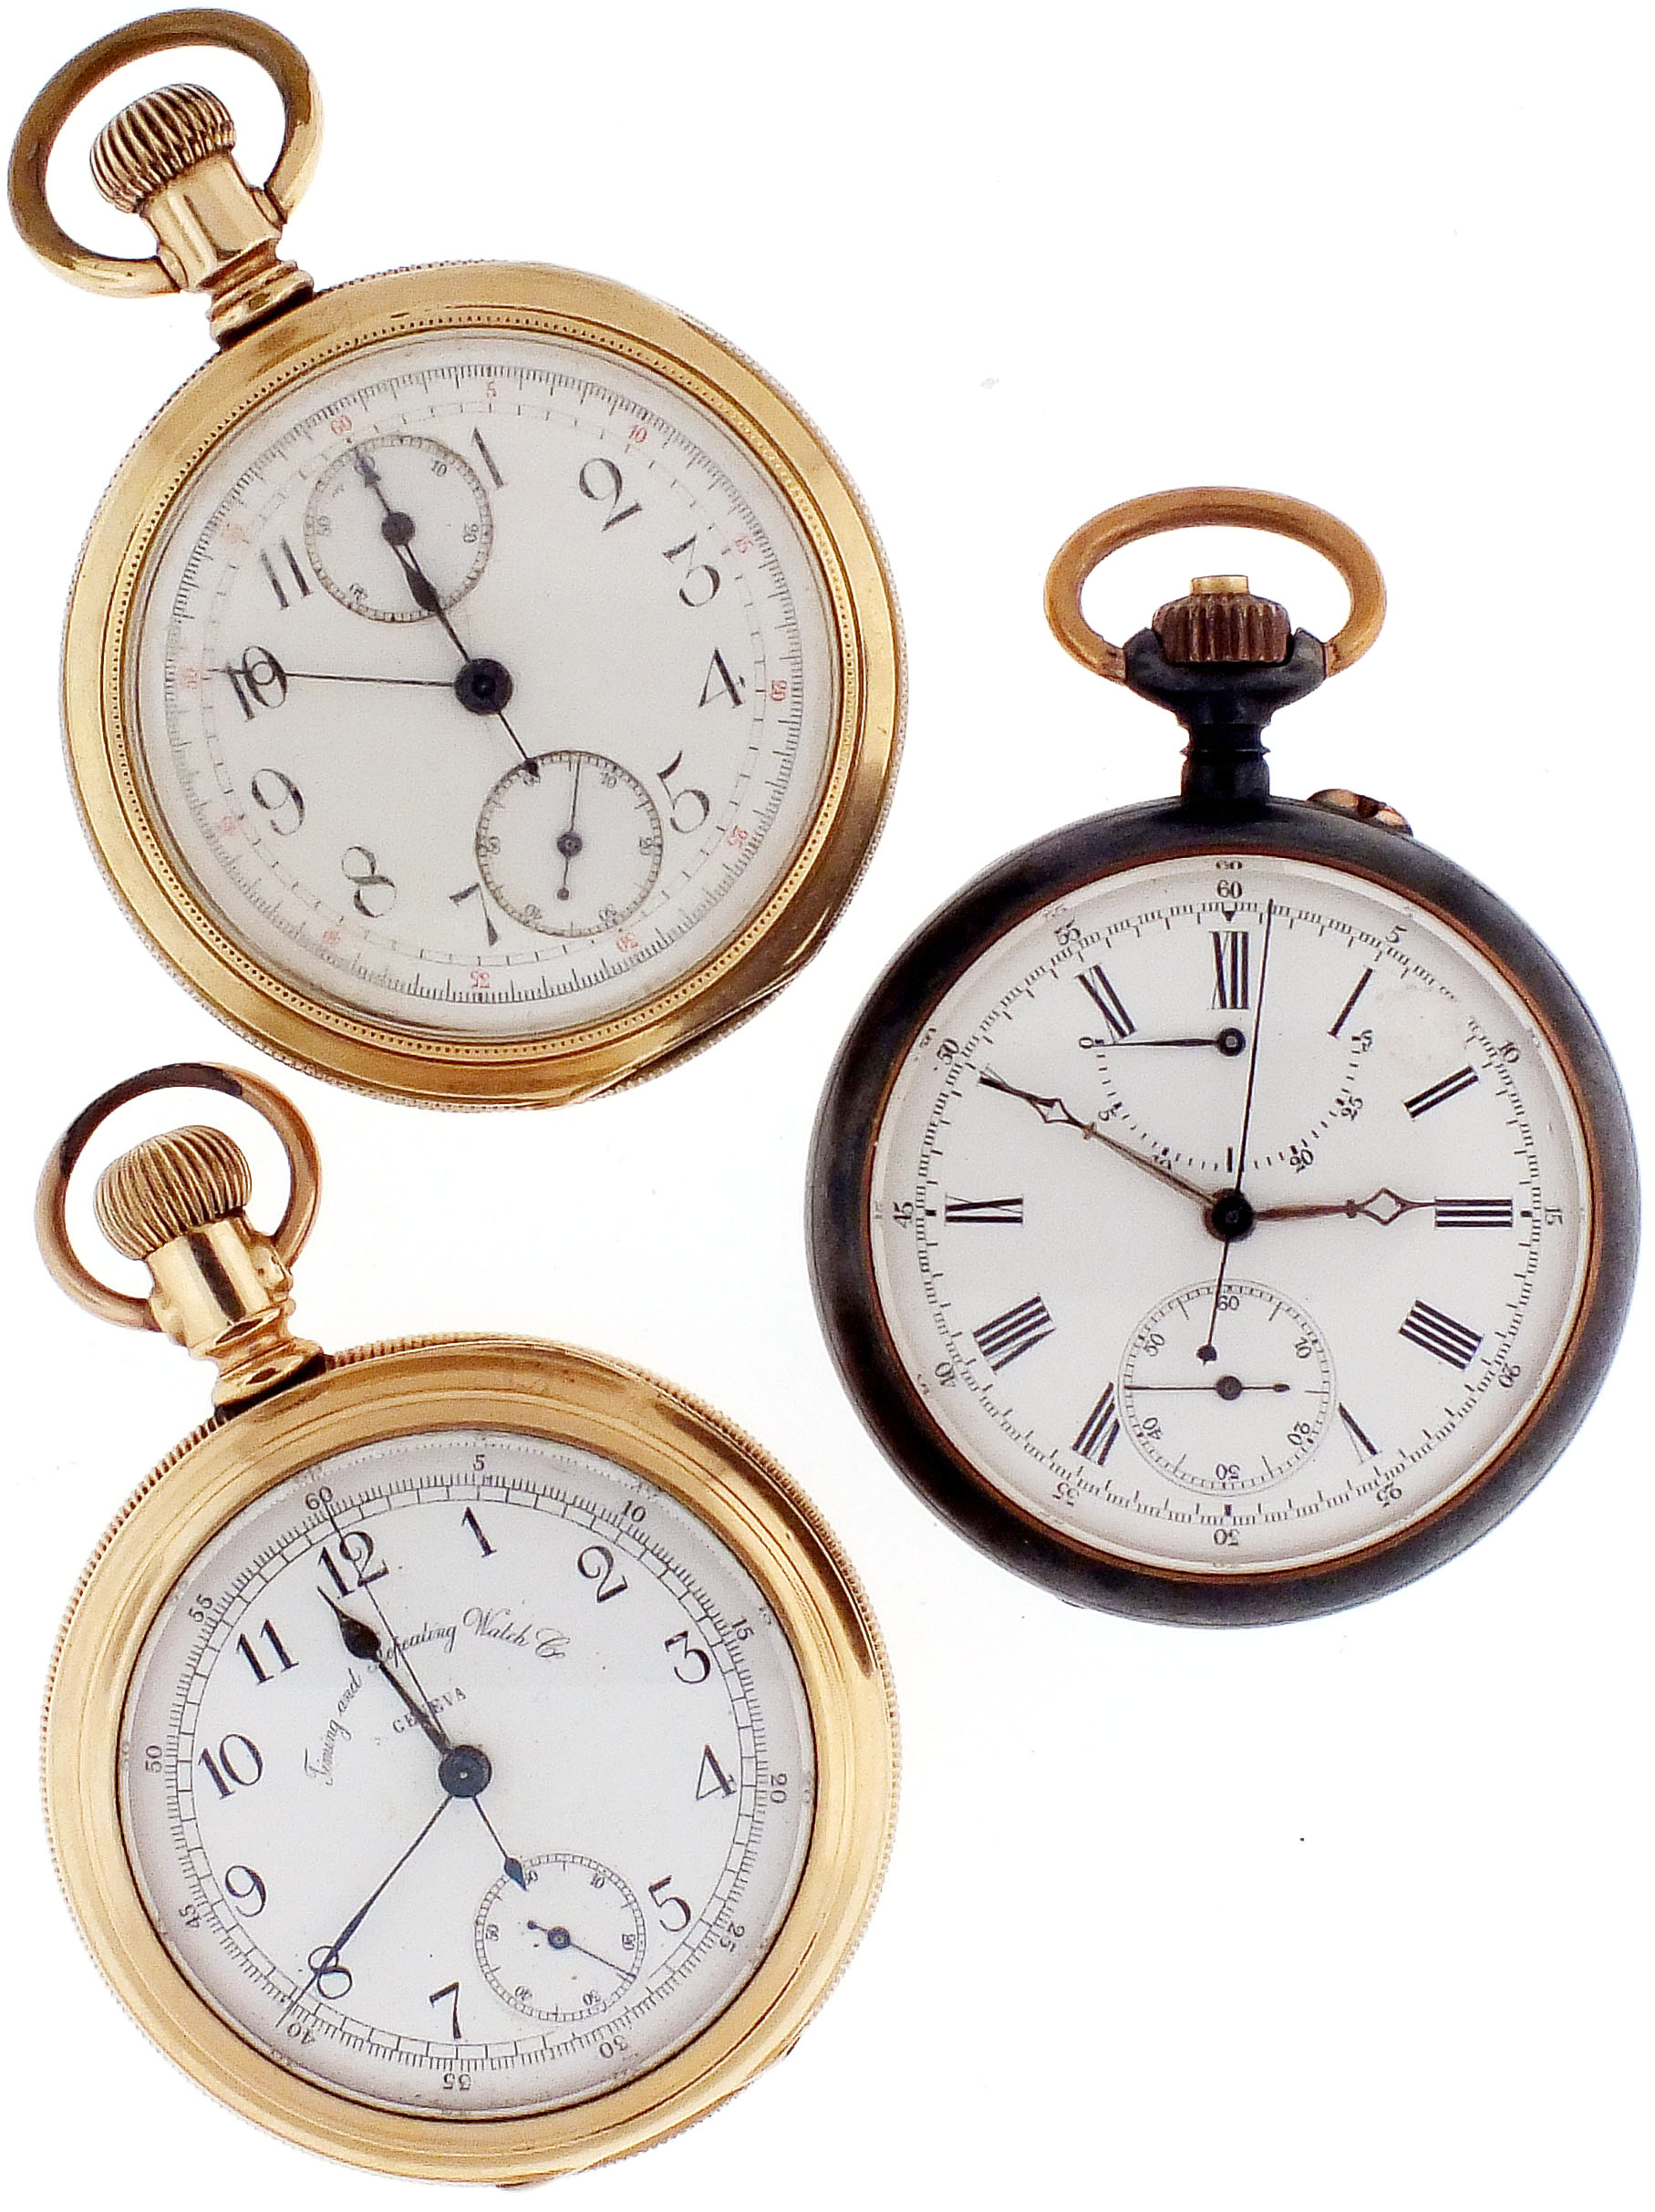 Three Swiss chronograph pocket watches